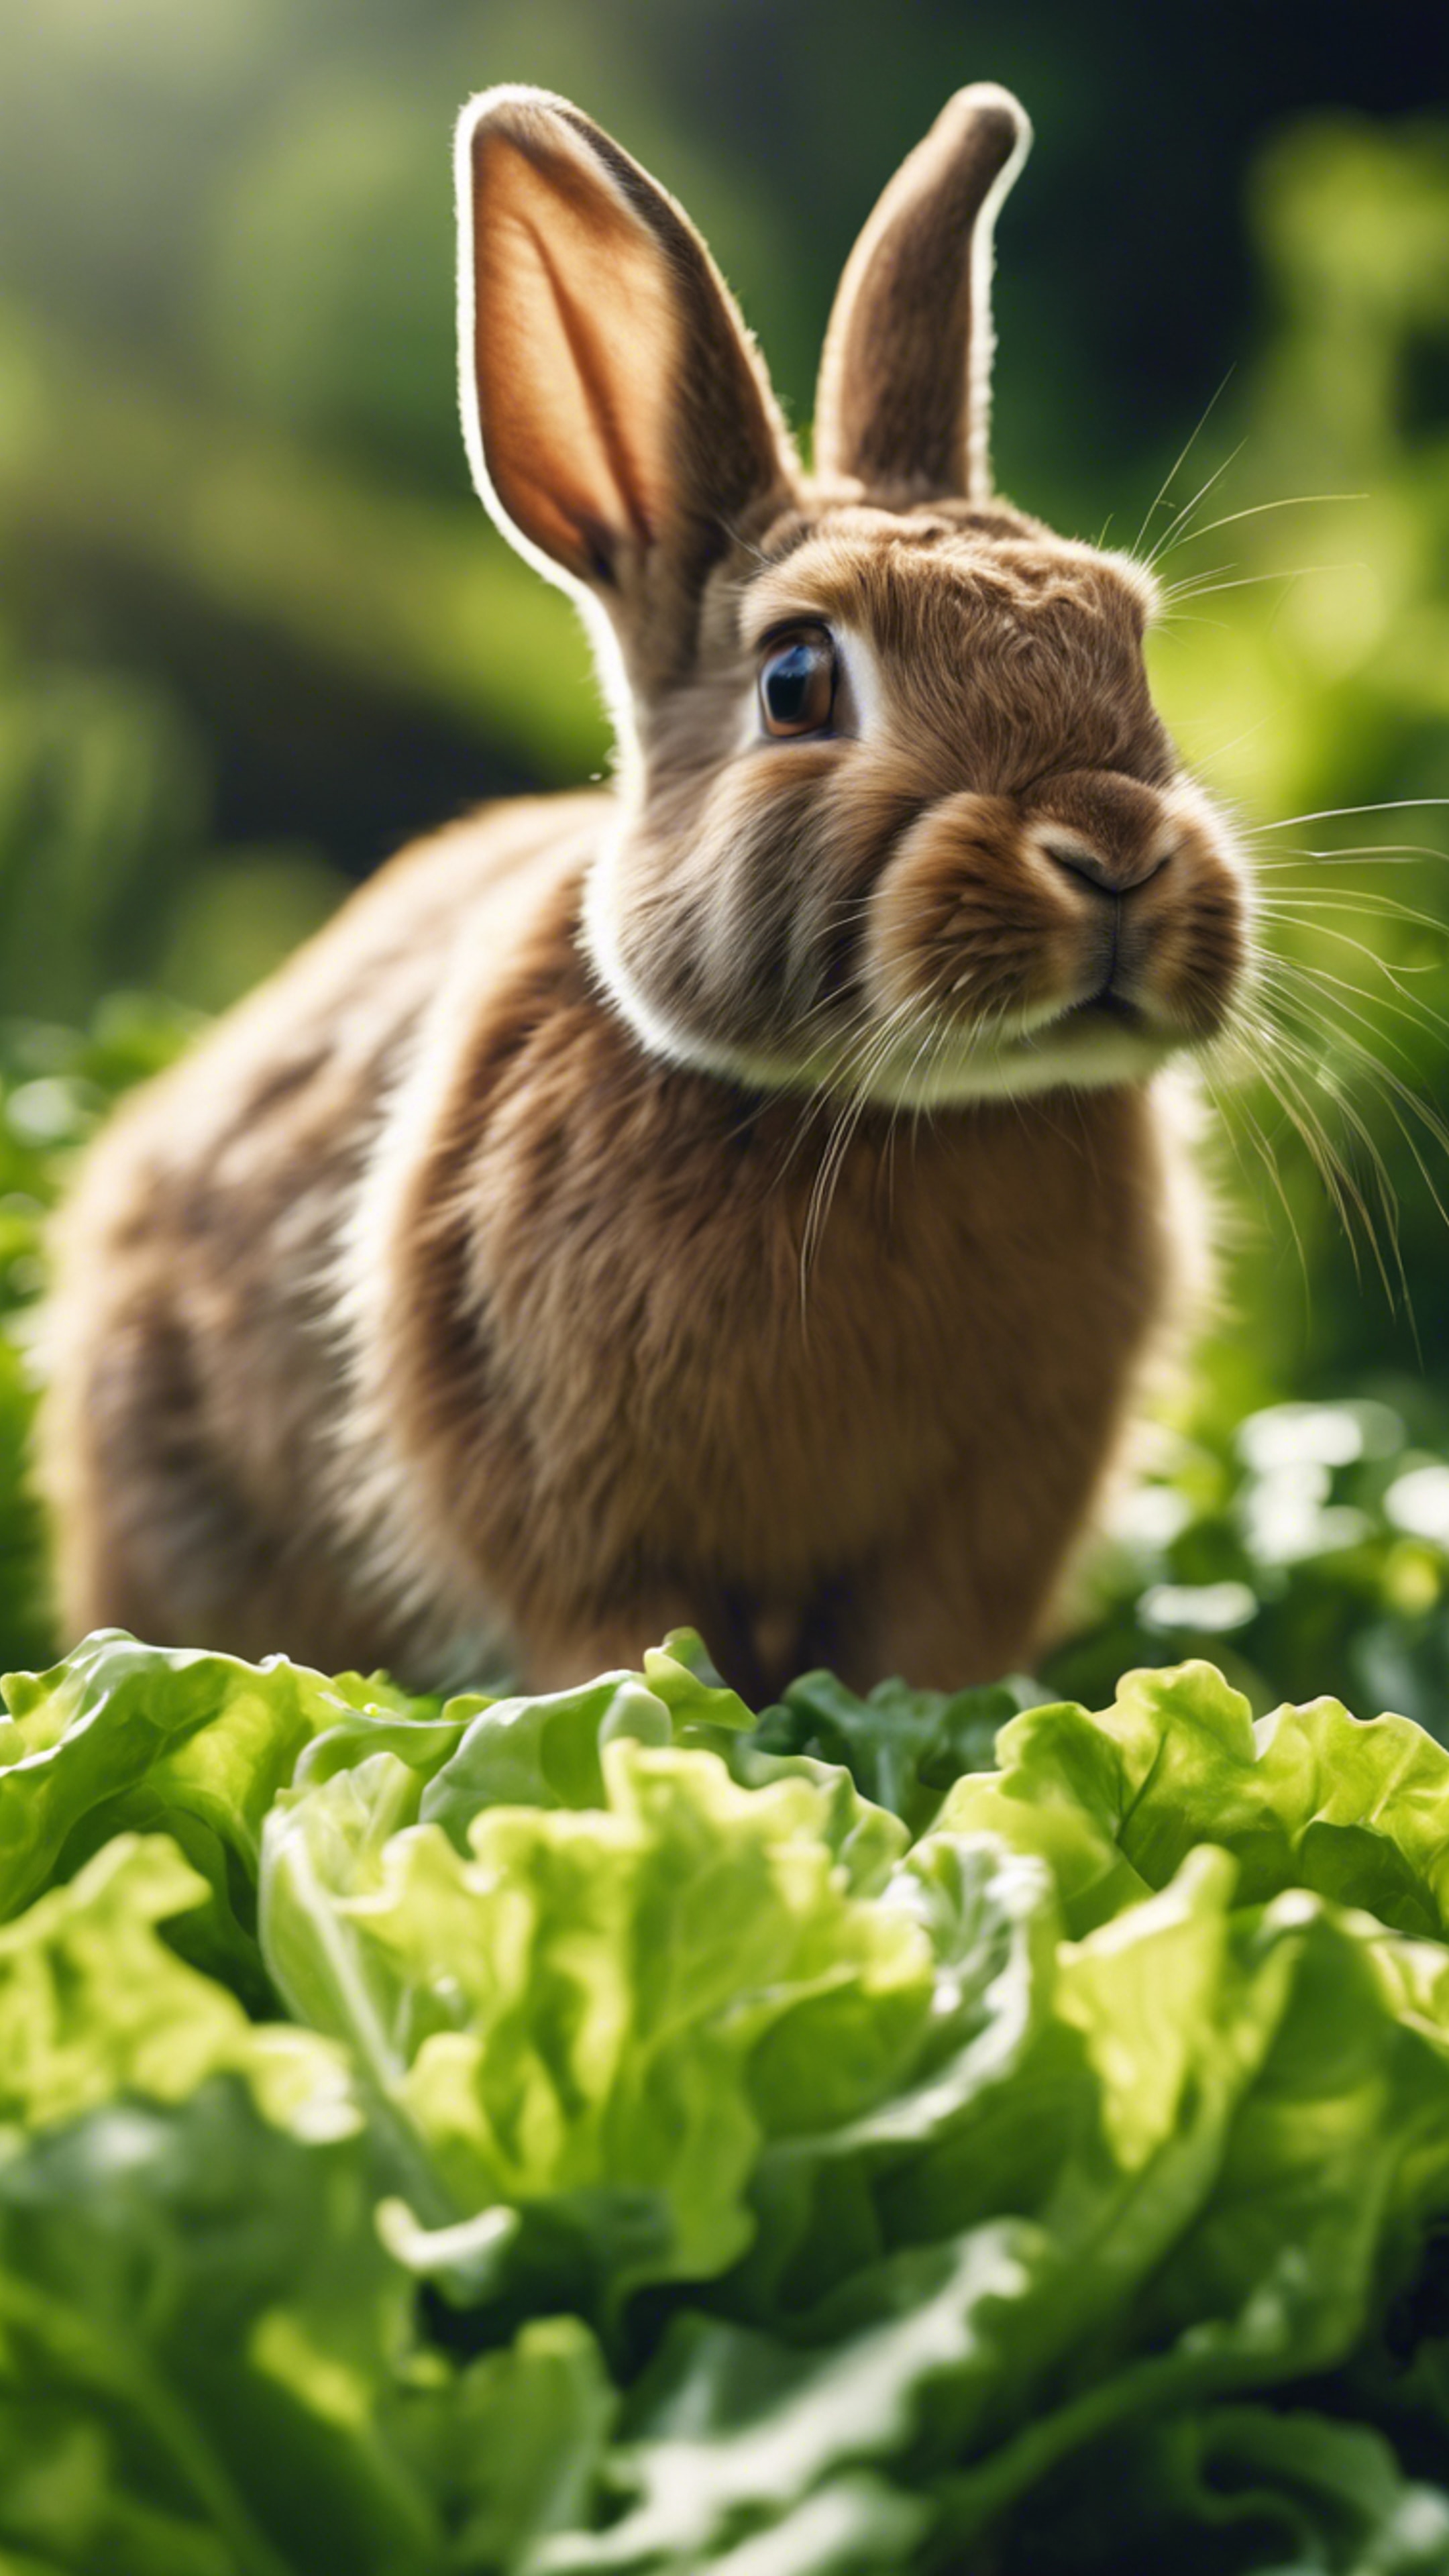 A cute brown rabbit nibbling on fresh green lettuce in a sunlit garden. Hintergrund[0f4f15256a1c40a6b3ba]